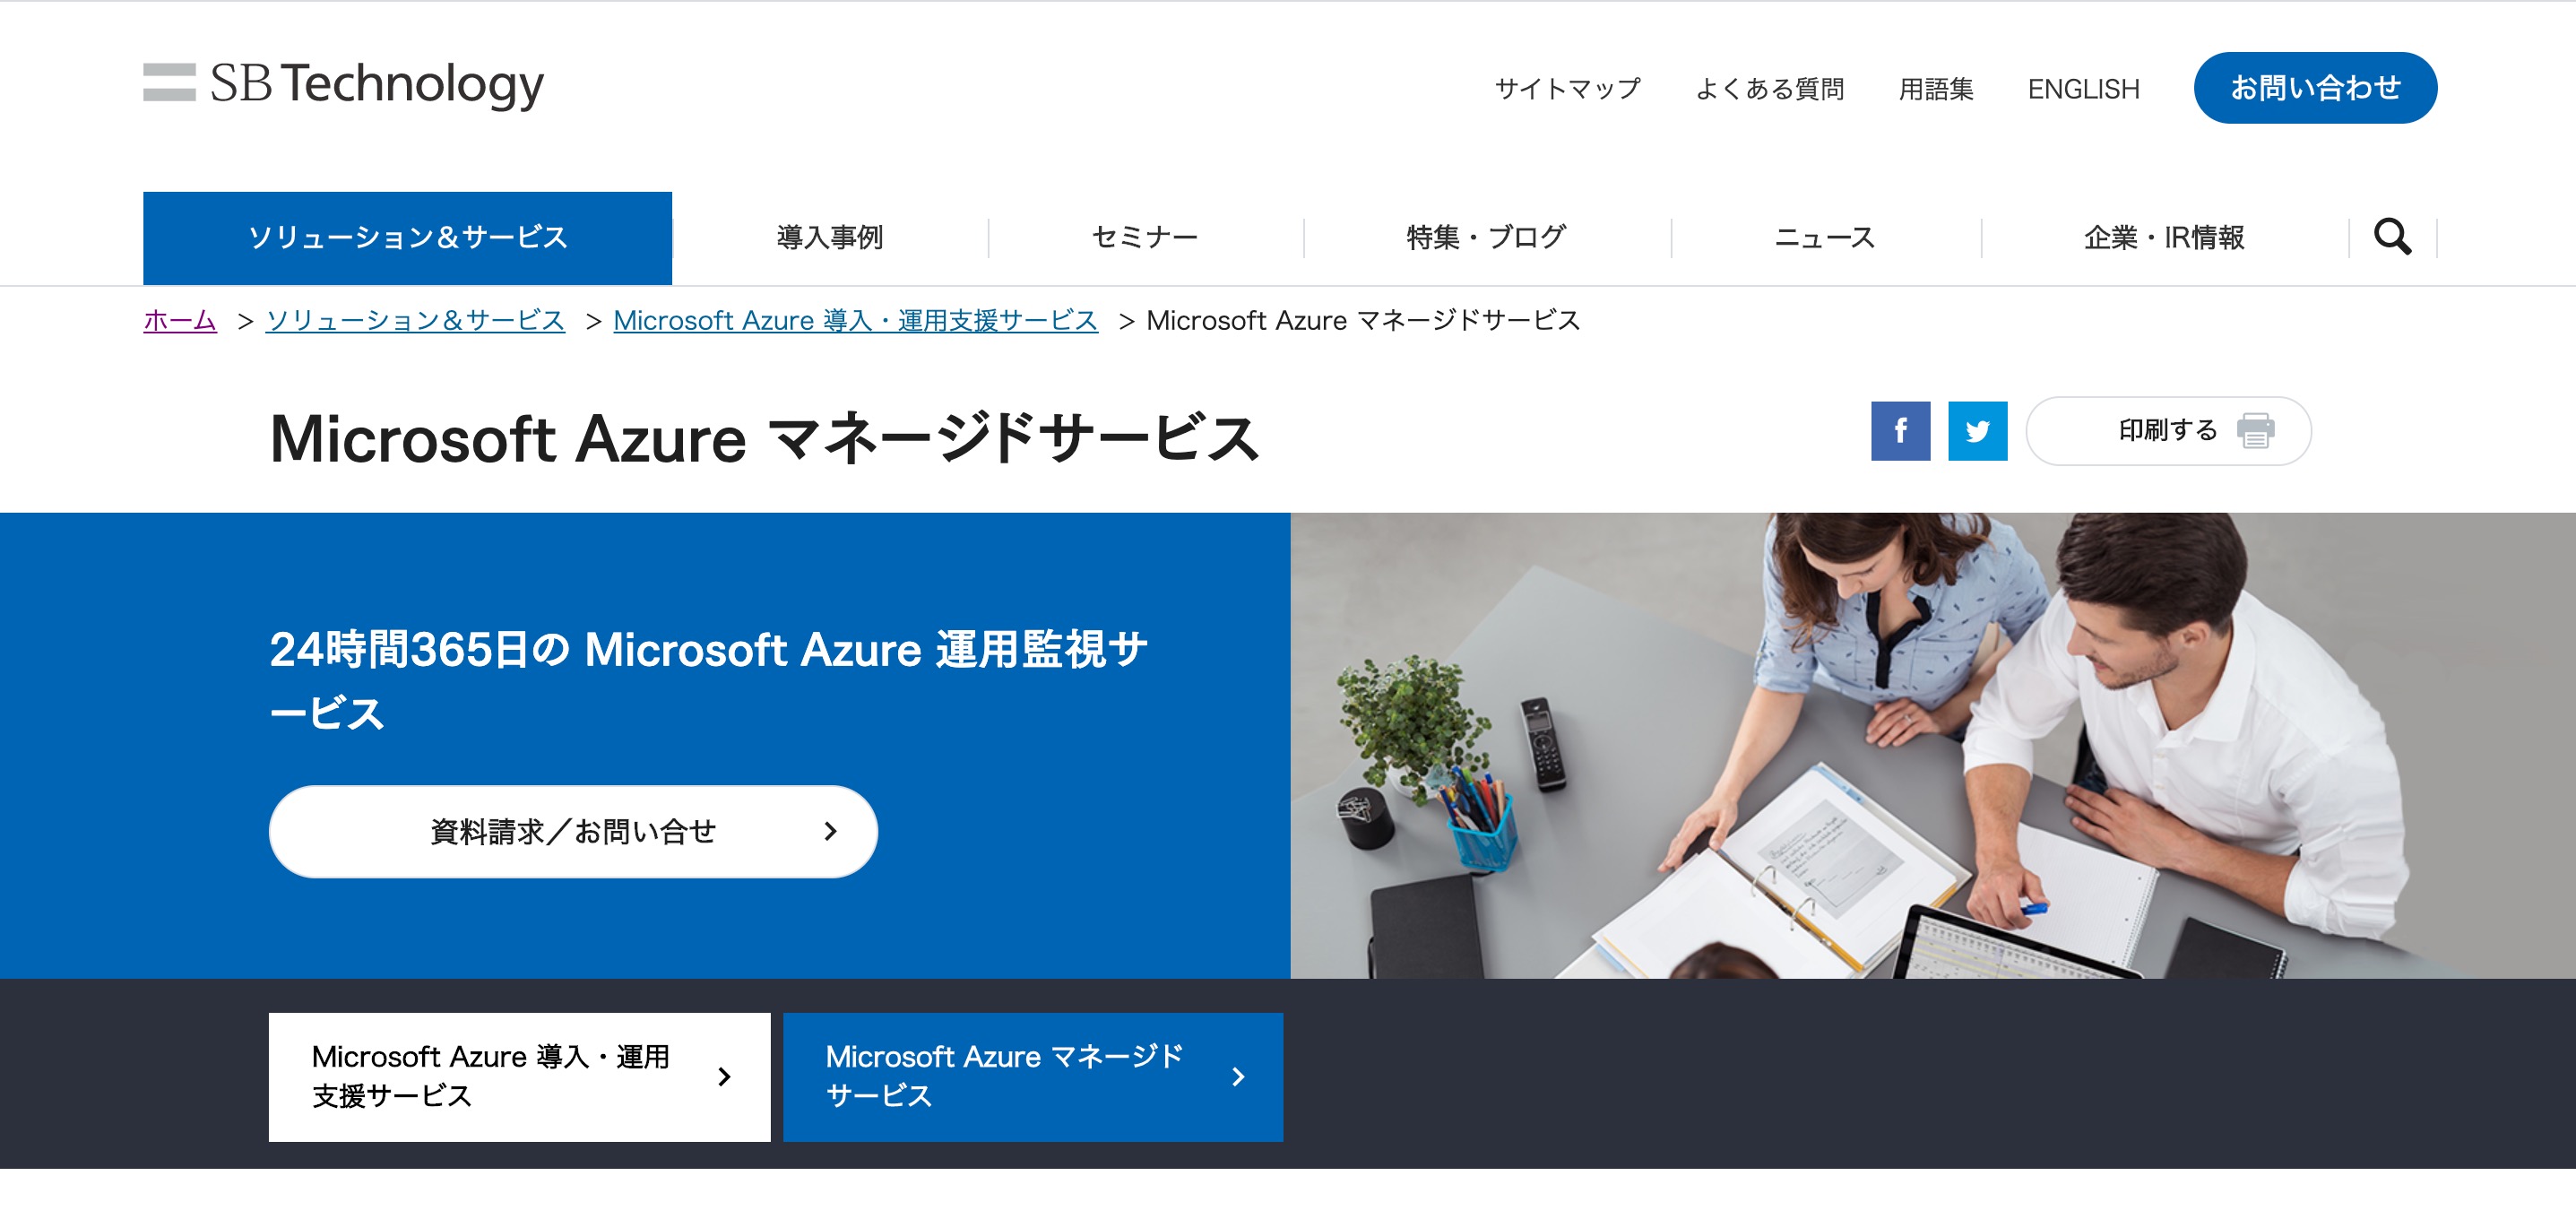 Microsoft Azure マネージドサービス